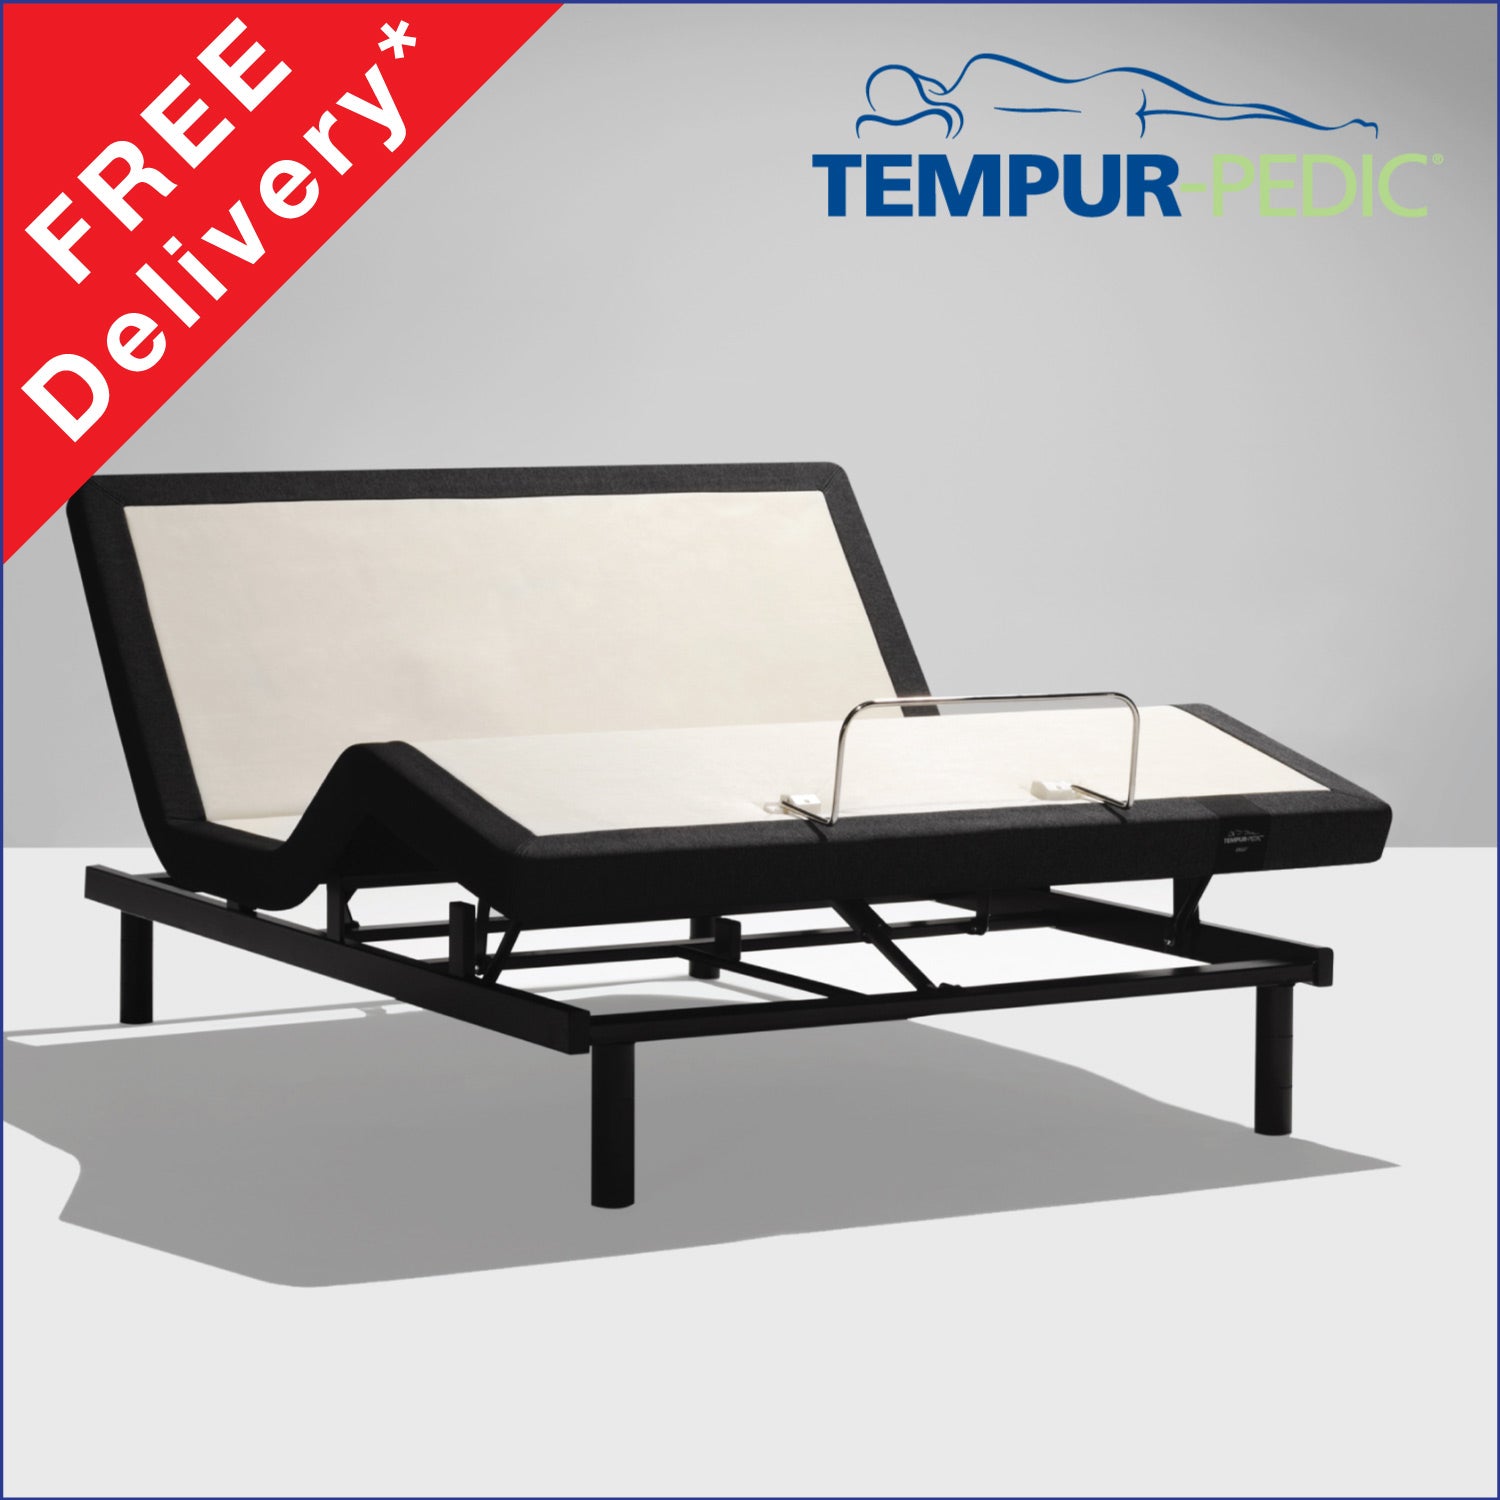 Tempur-Ergo® Adjustable Foundation